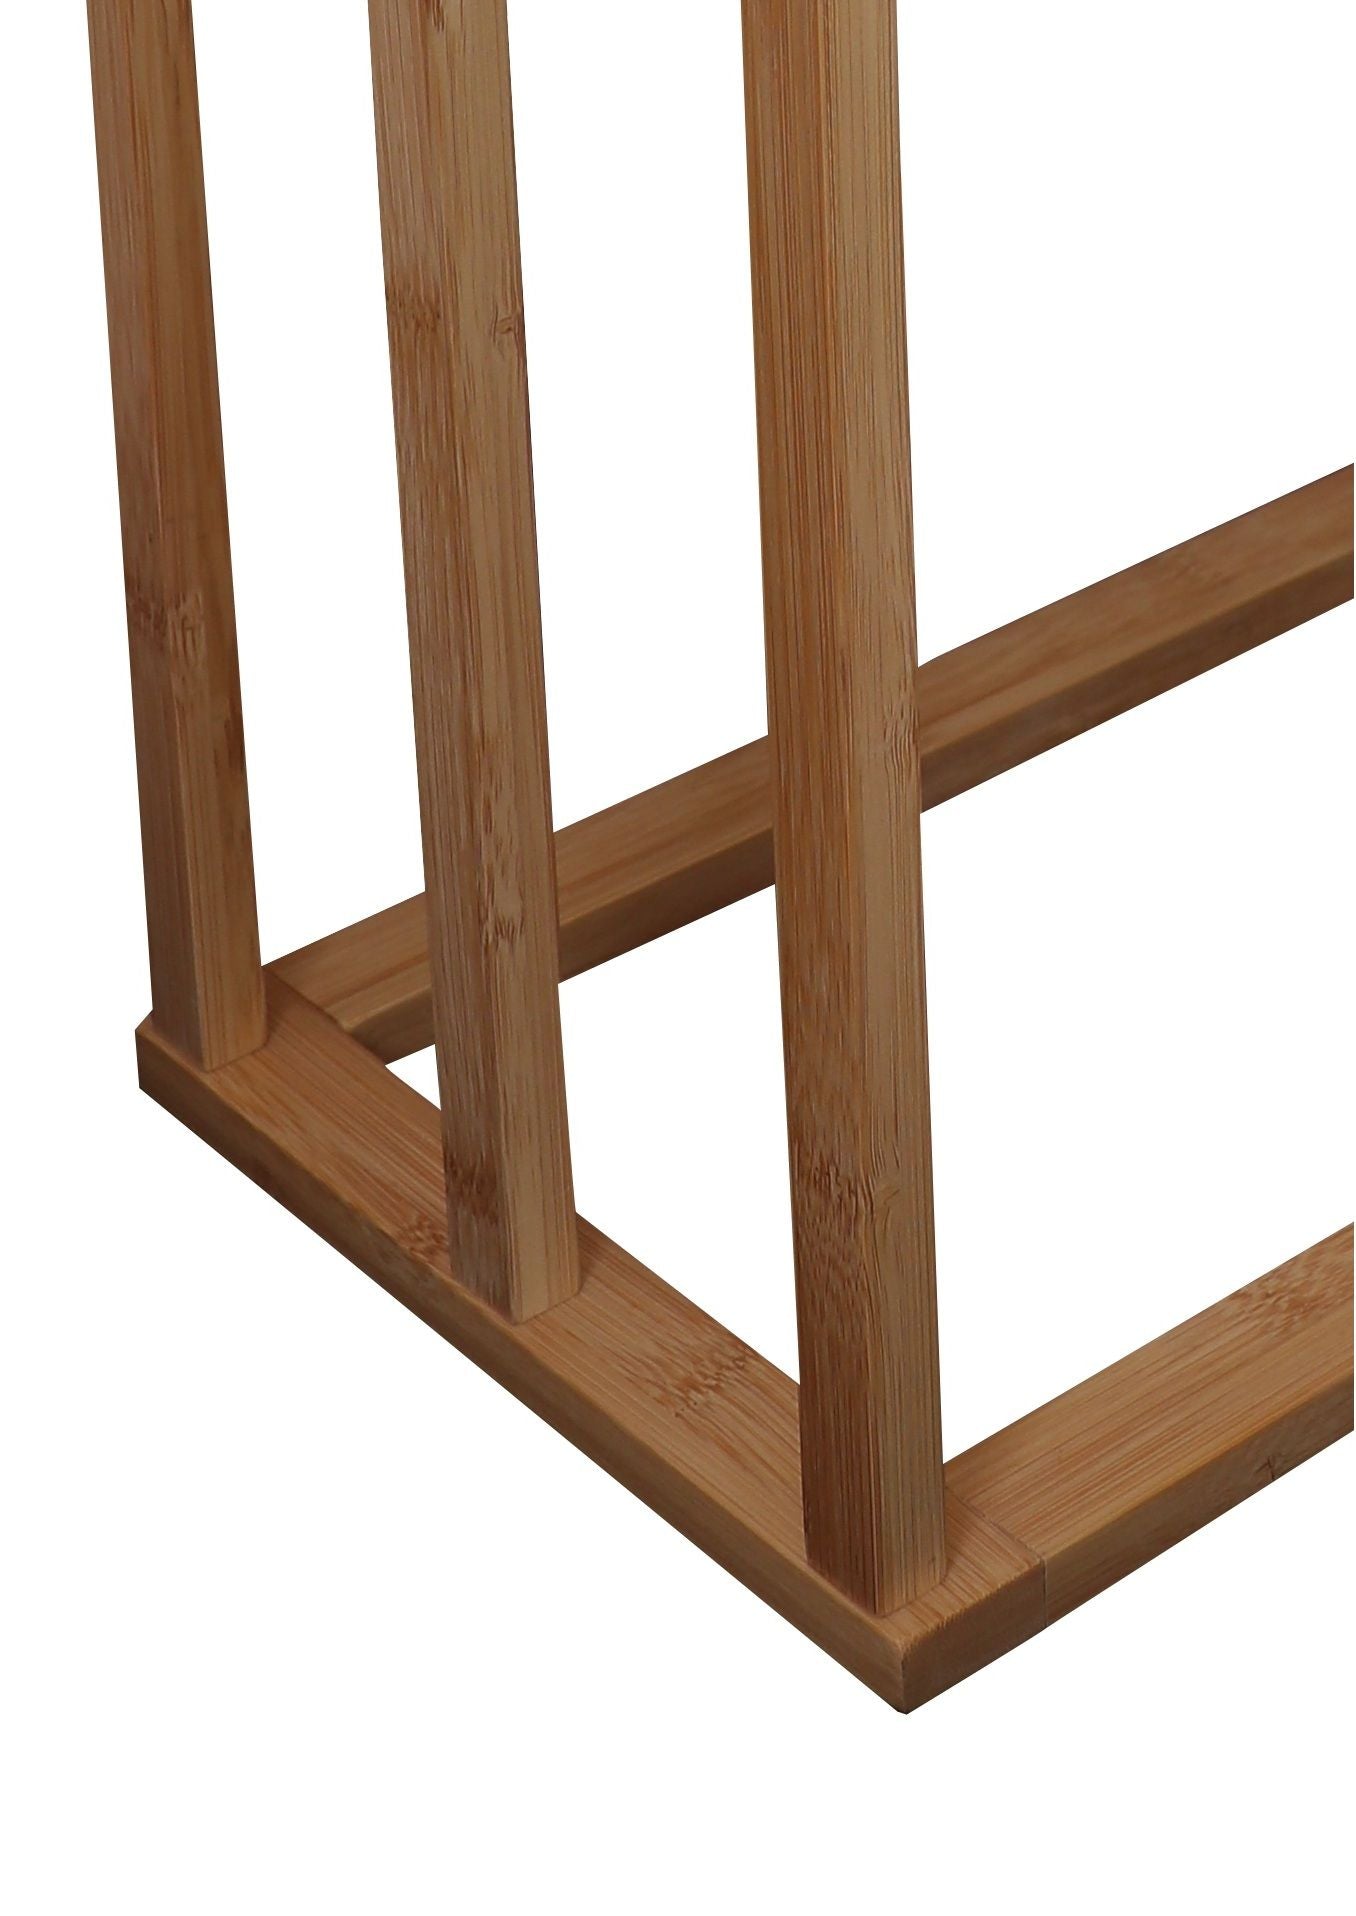 Bamboo Towel Bar Holder Rack 3-Tier Freestanding for Bathroom and Bedroom - BM House & Garden